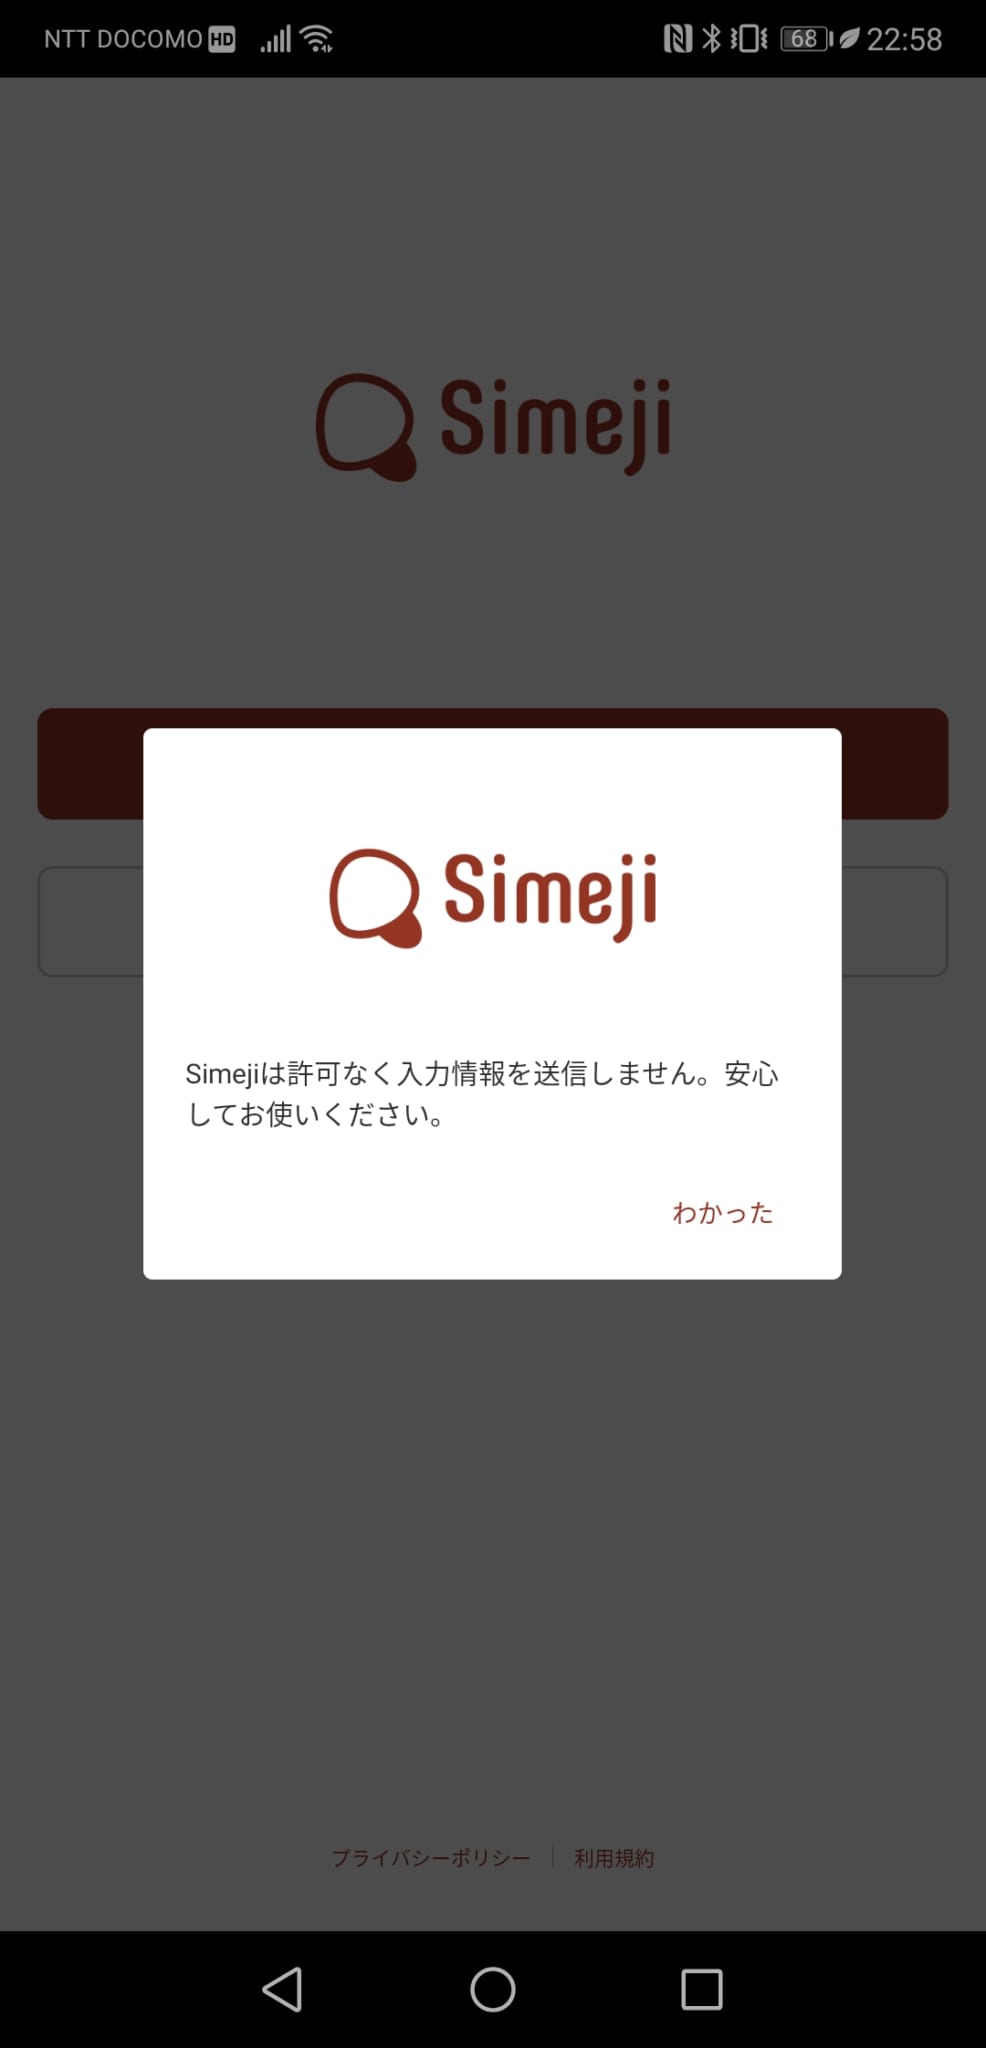 Simejiでスマホのキーボードをオシャレに Simejiについて紹介します 女性向け総合オタクニュースサイト いちごあん